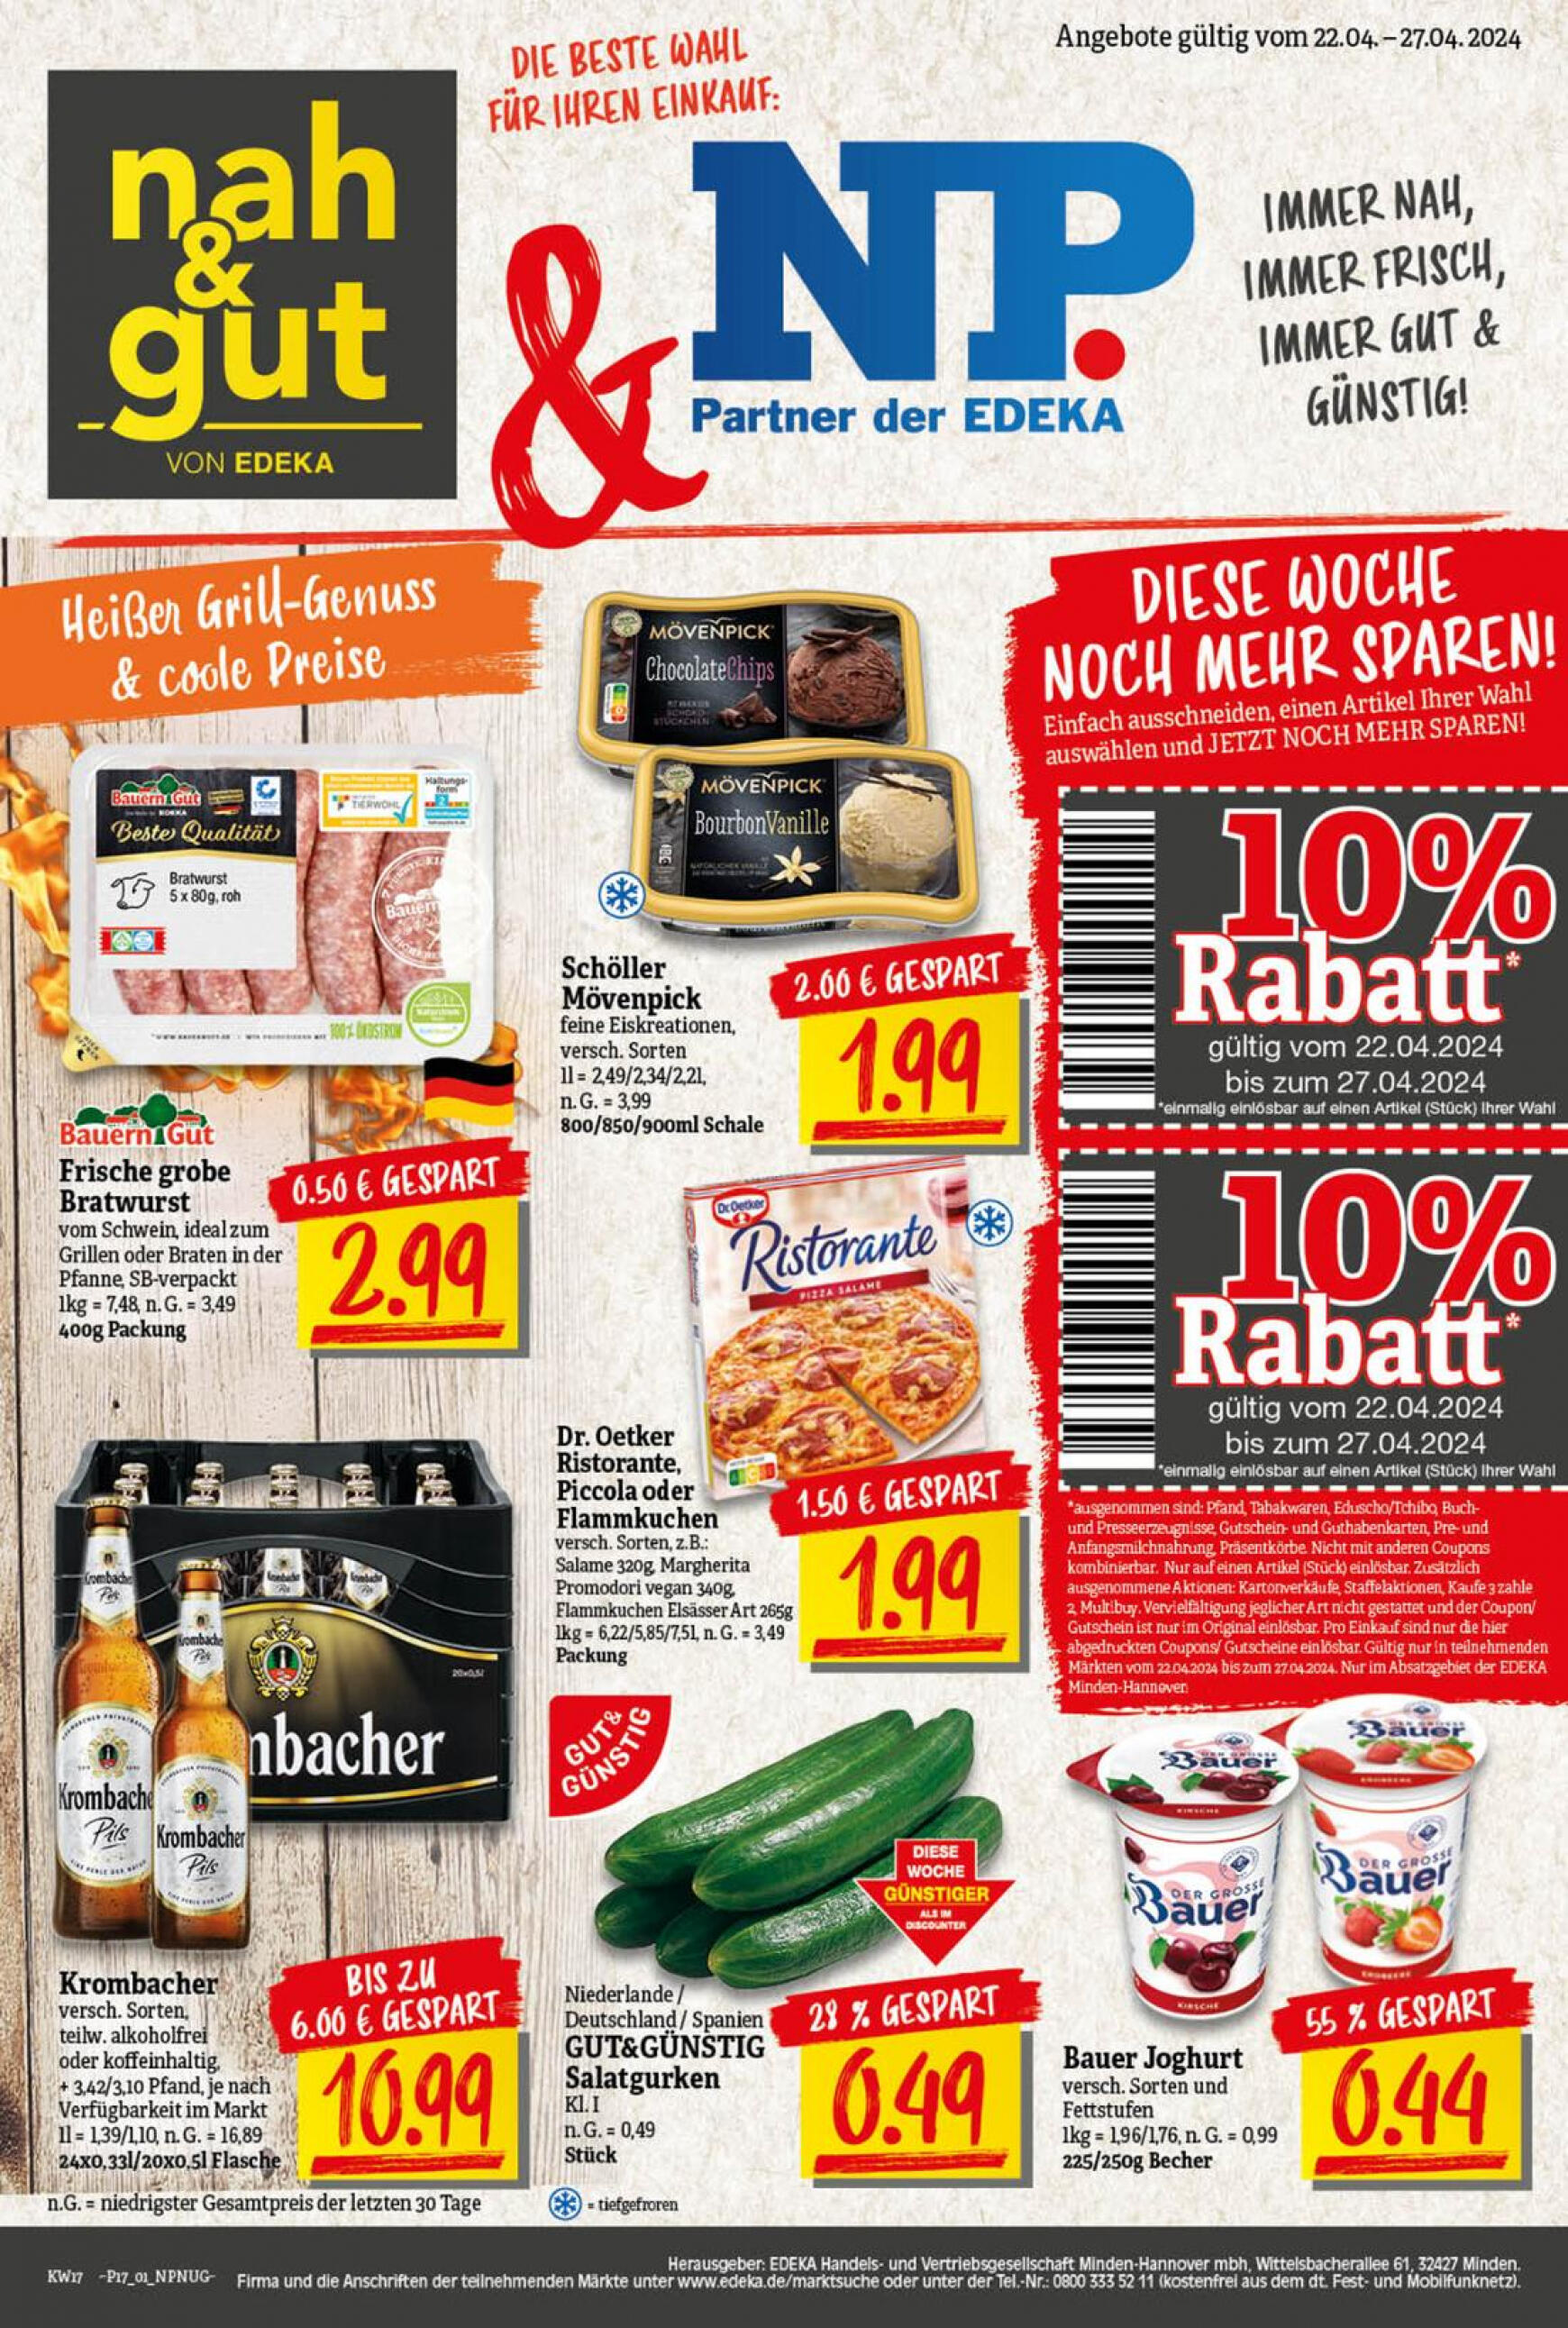 np - Flyer NP - Edeka aktuell 22.04. - 27.04. - page: 1